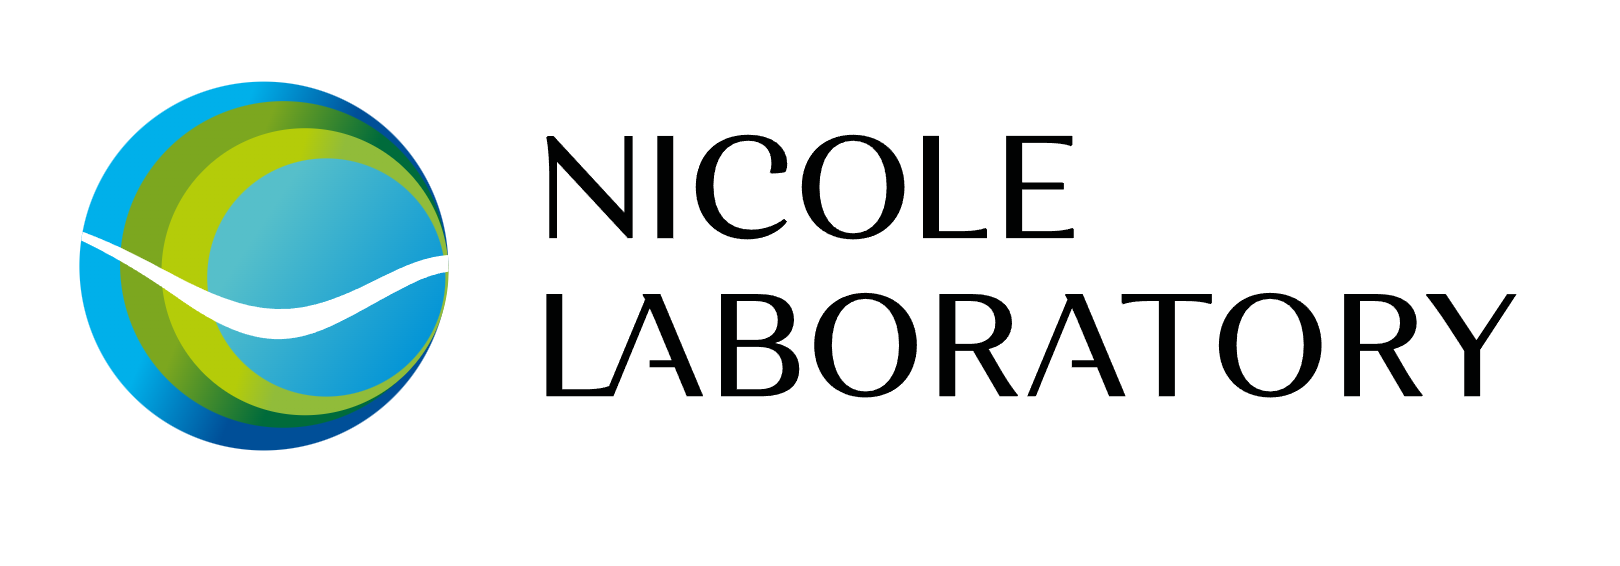 NICOLE LABORATORY 